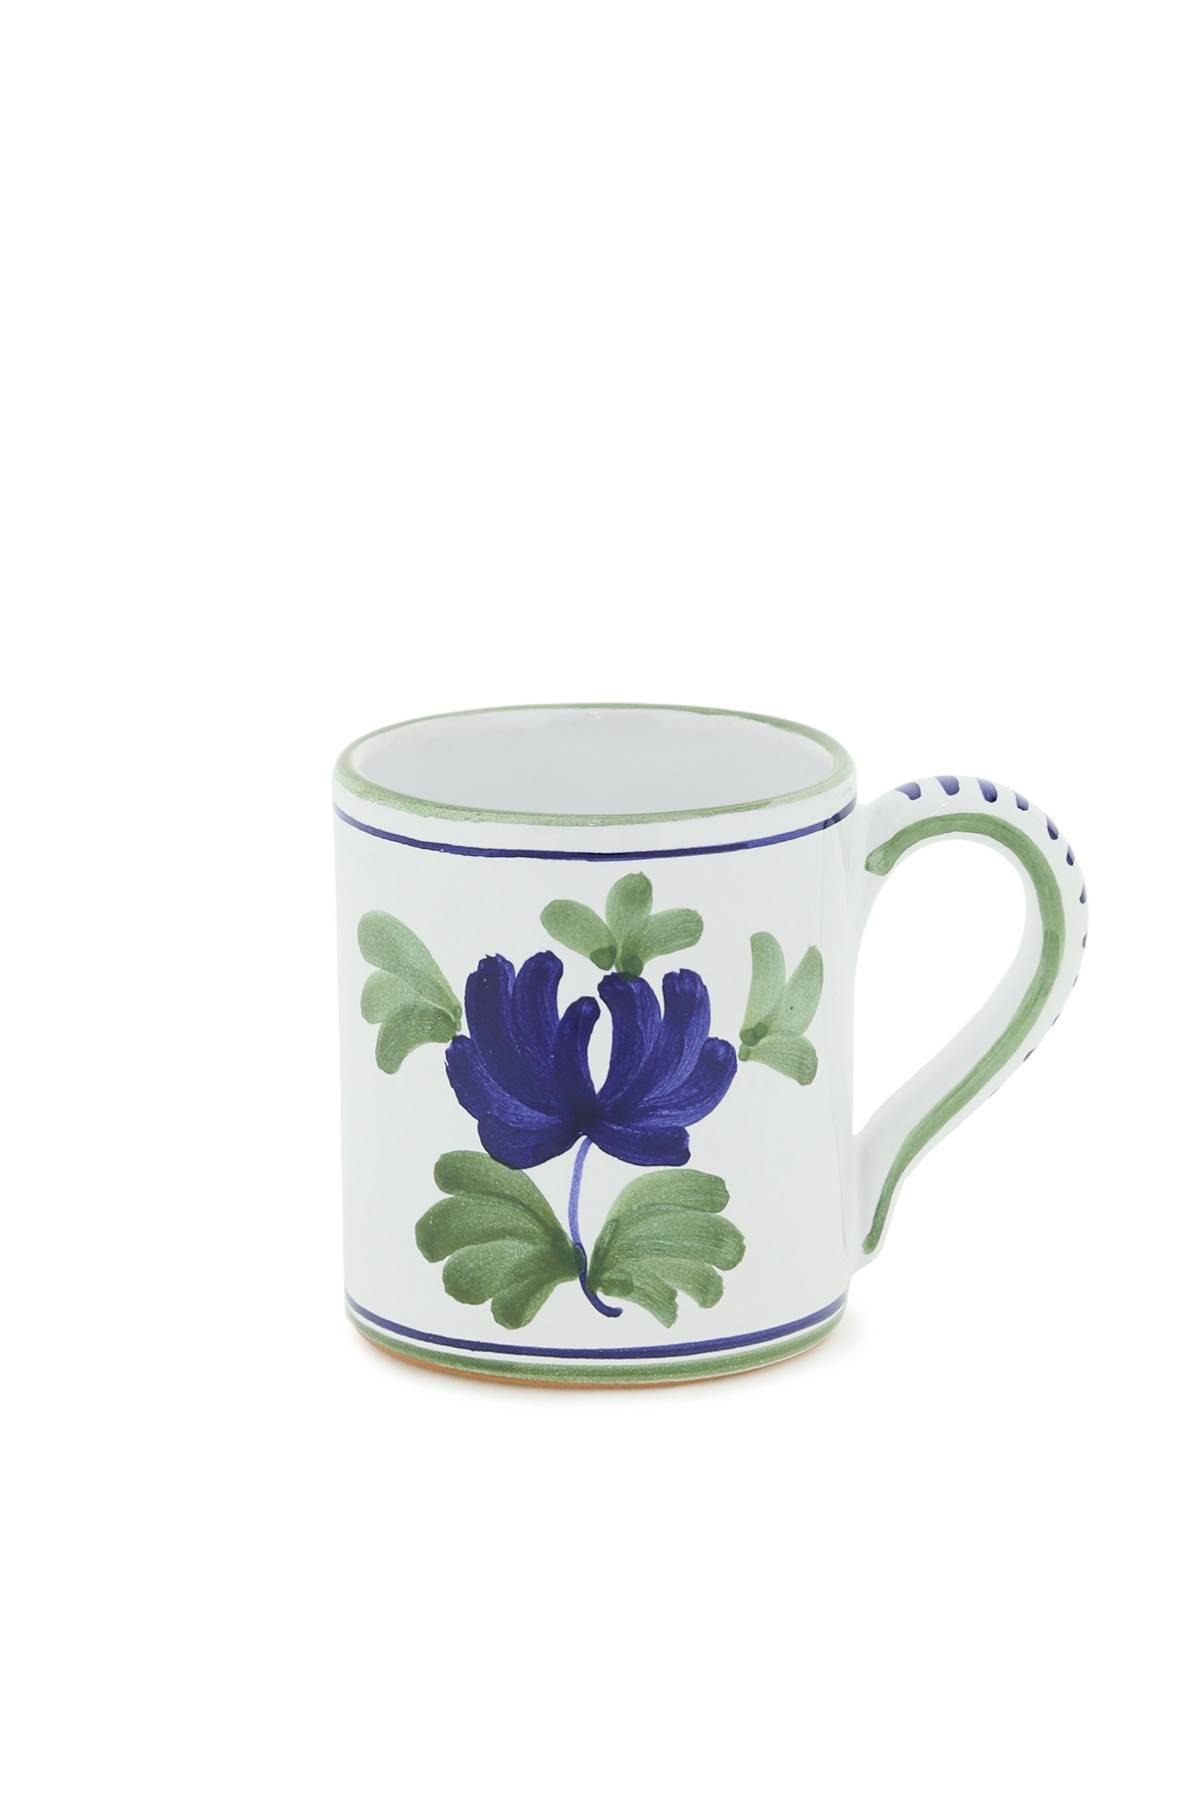 CABANA CABANA blossom mug